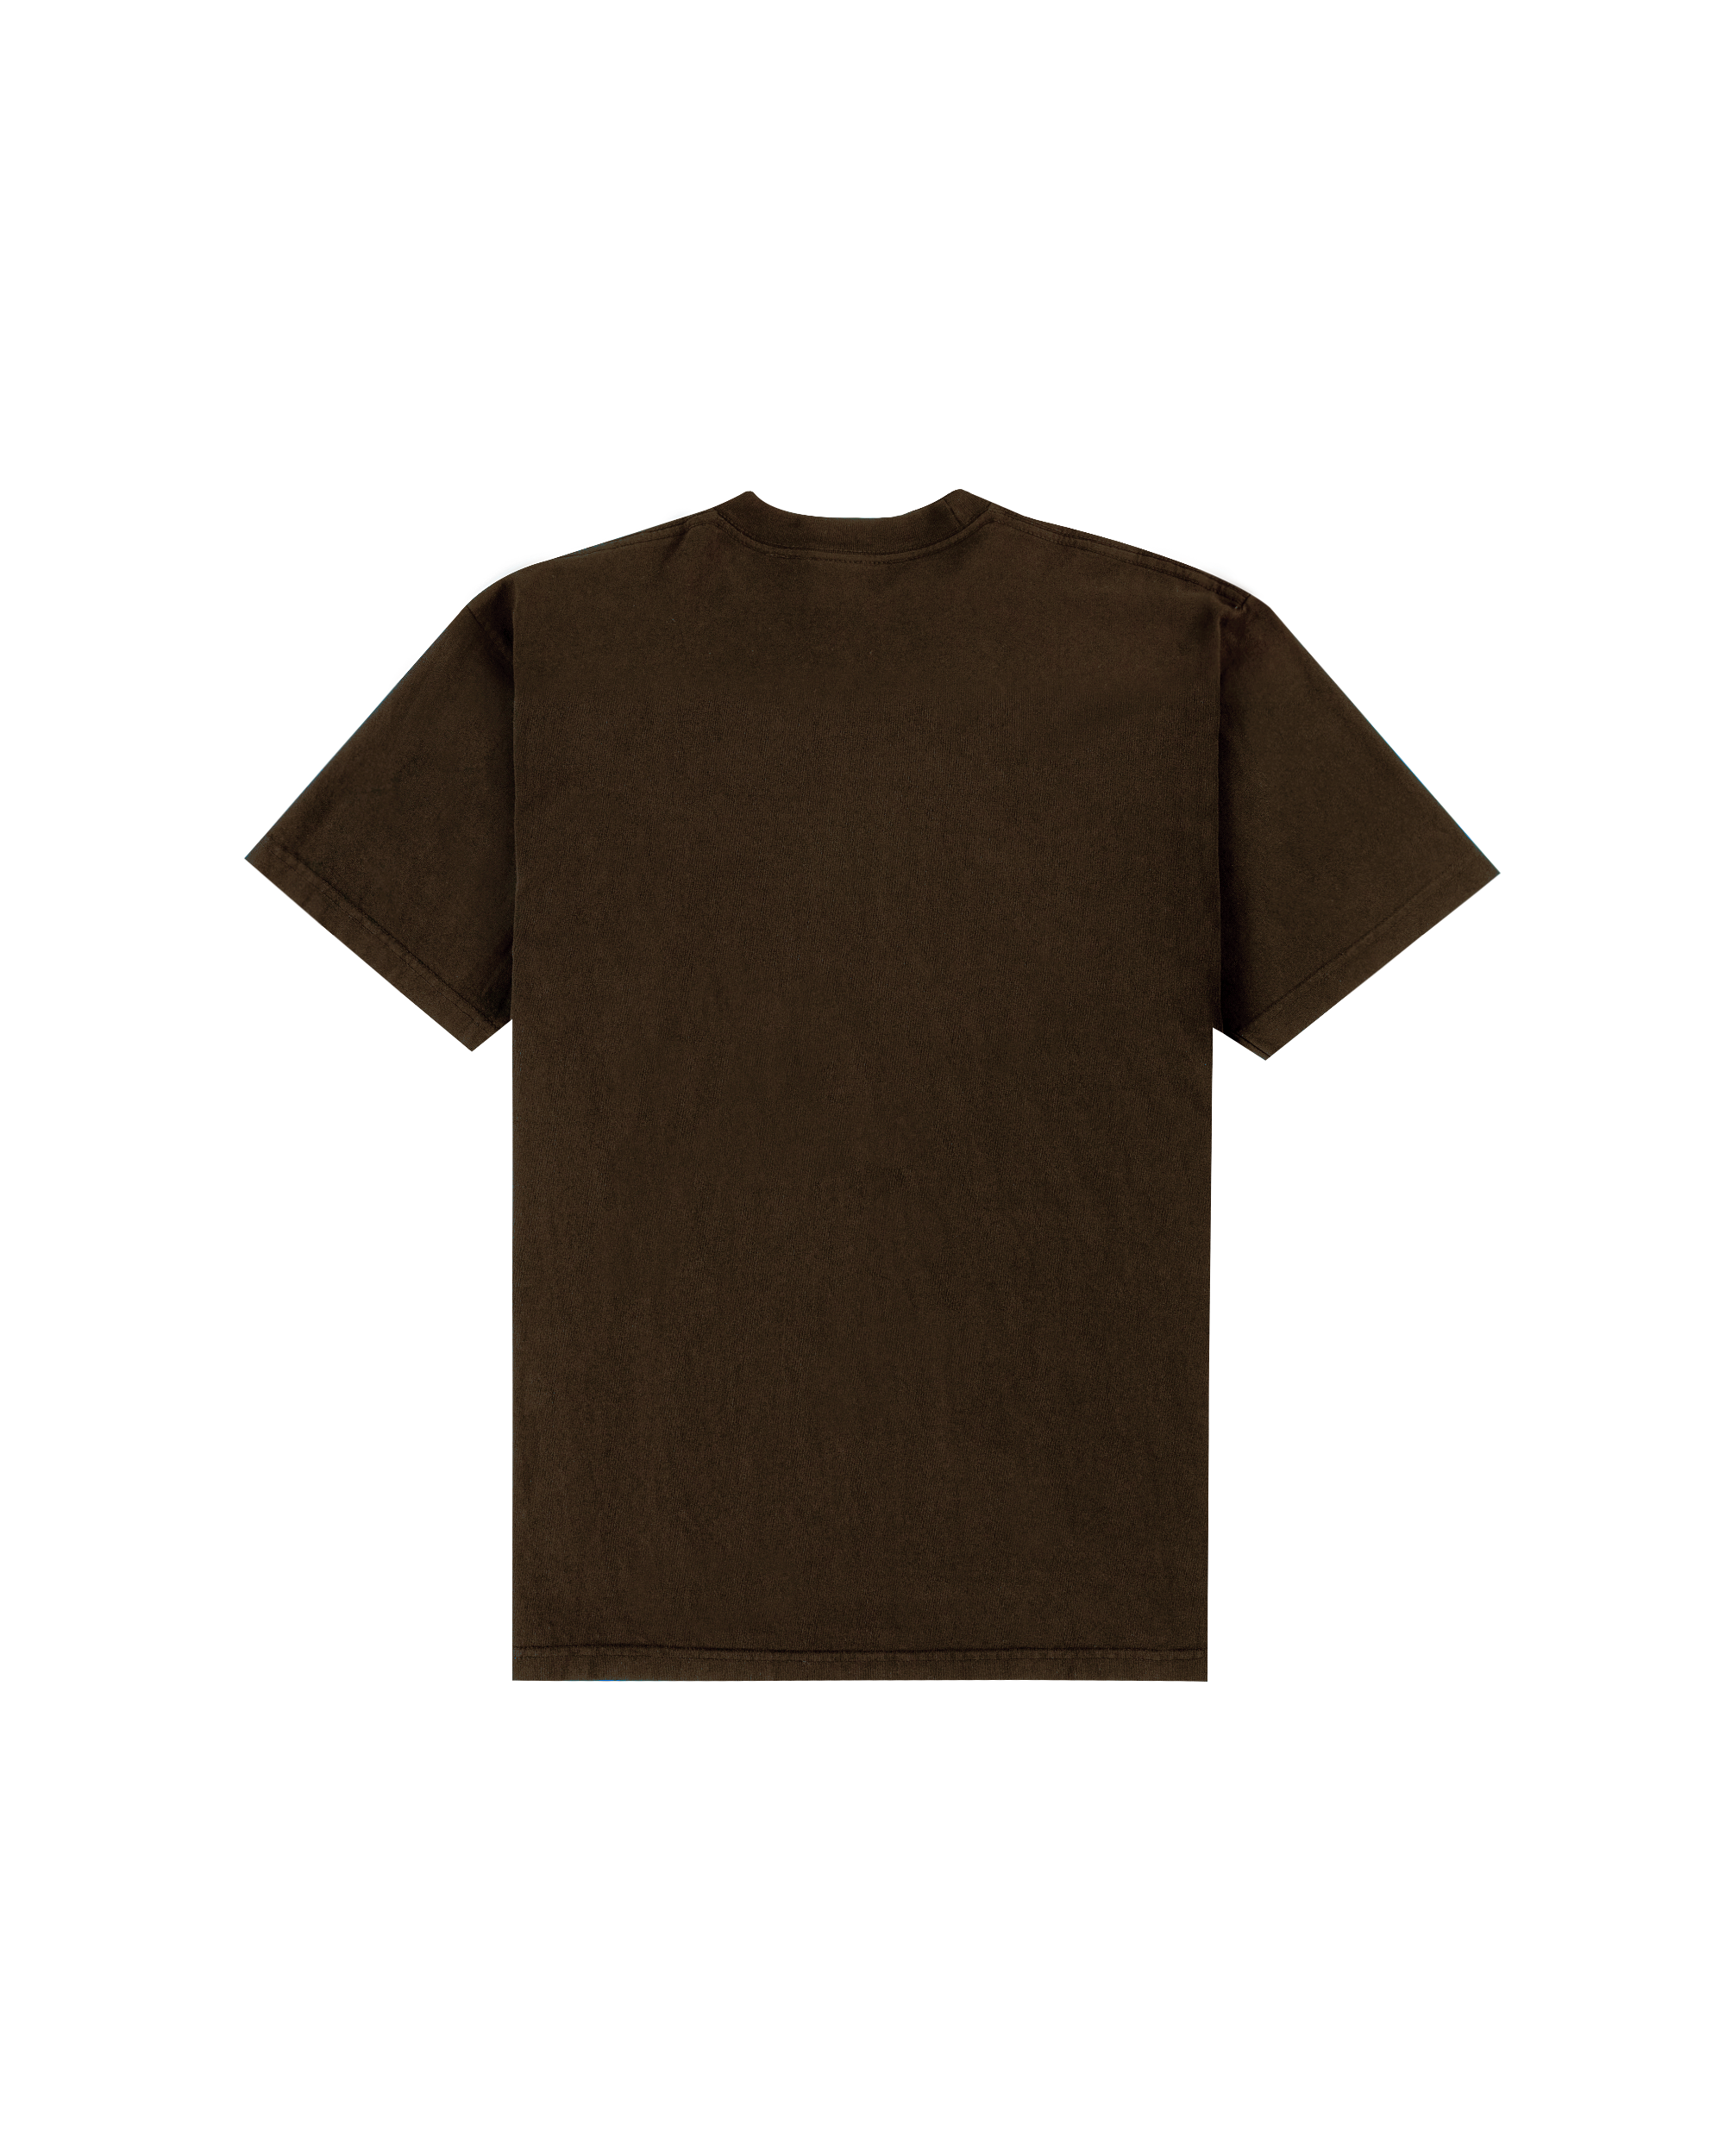 Deity T-shirt - Chocolate